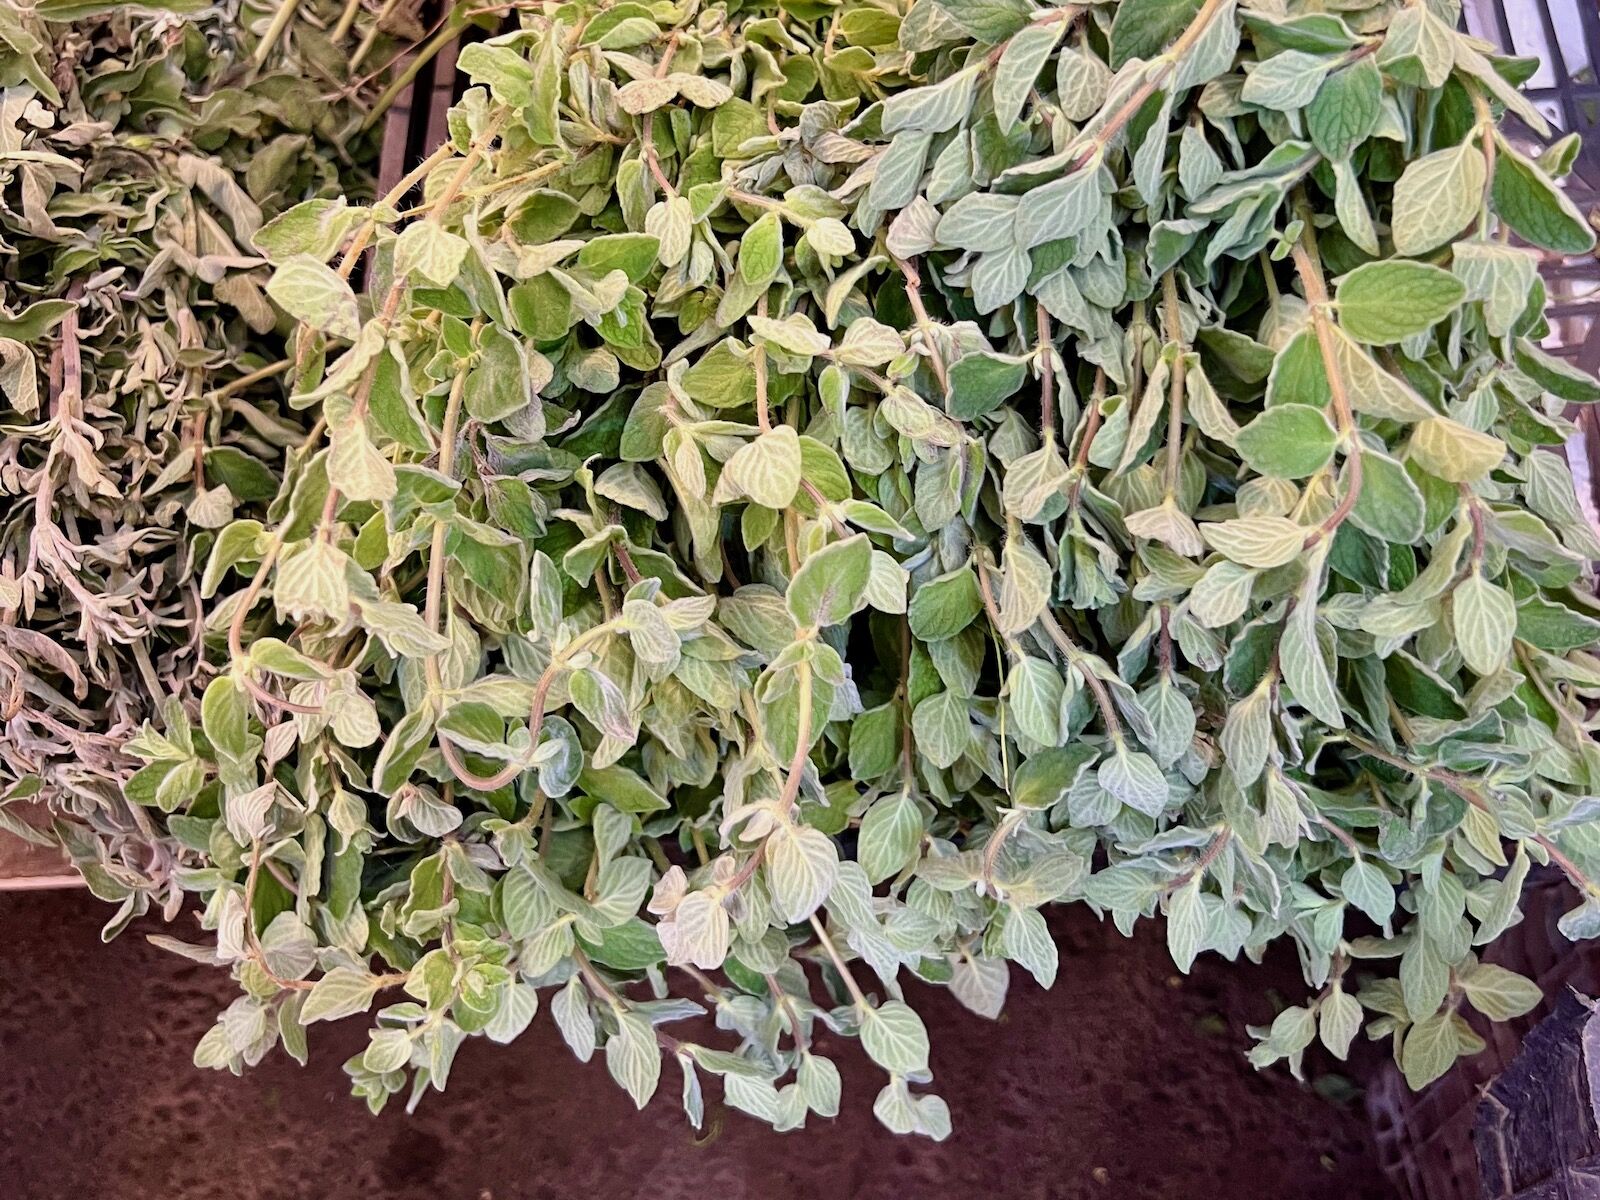 dried herbs in jordan market